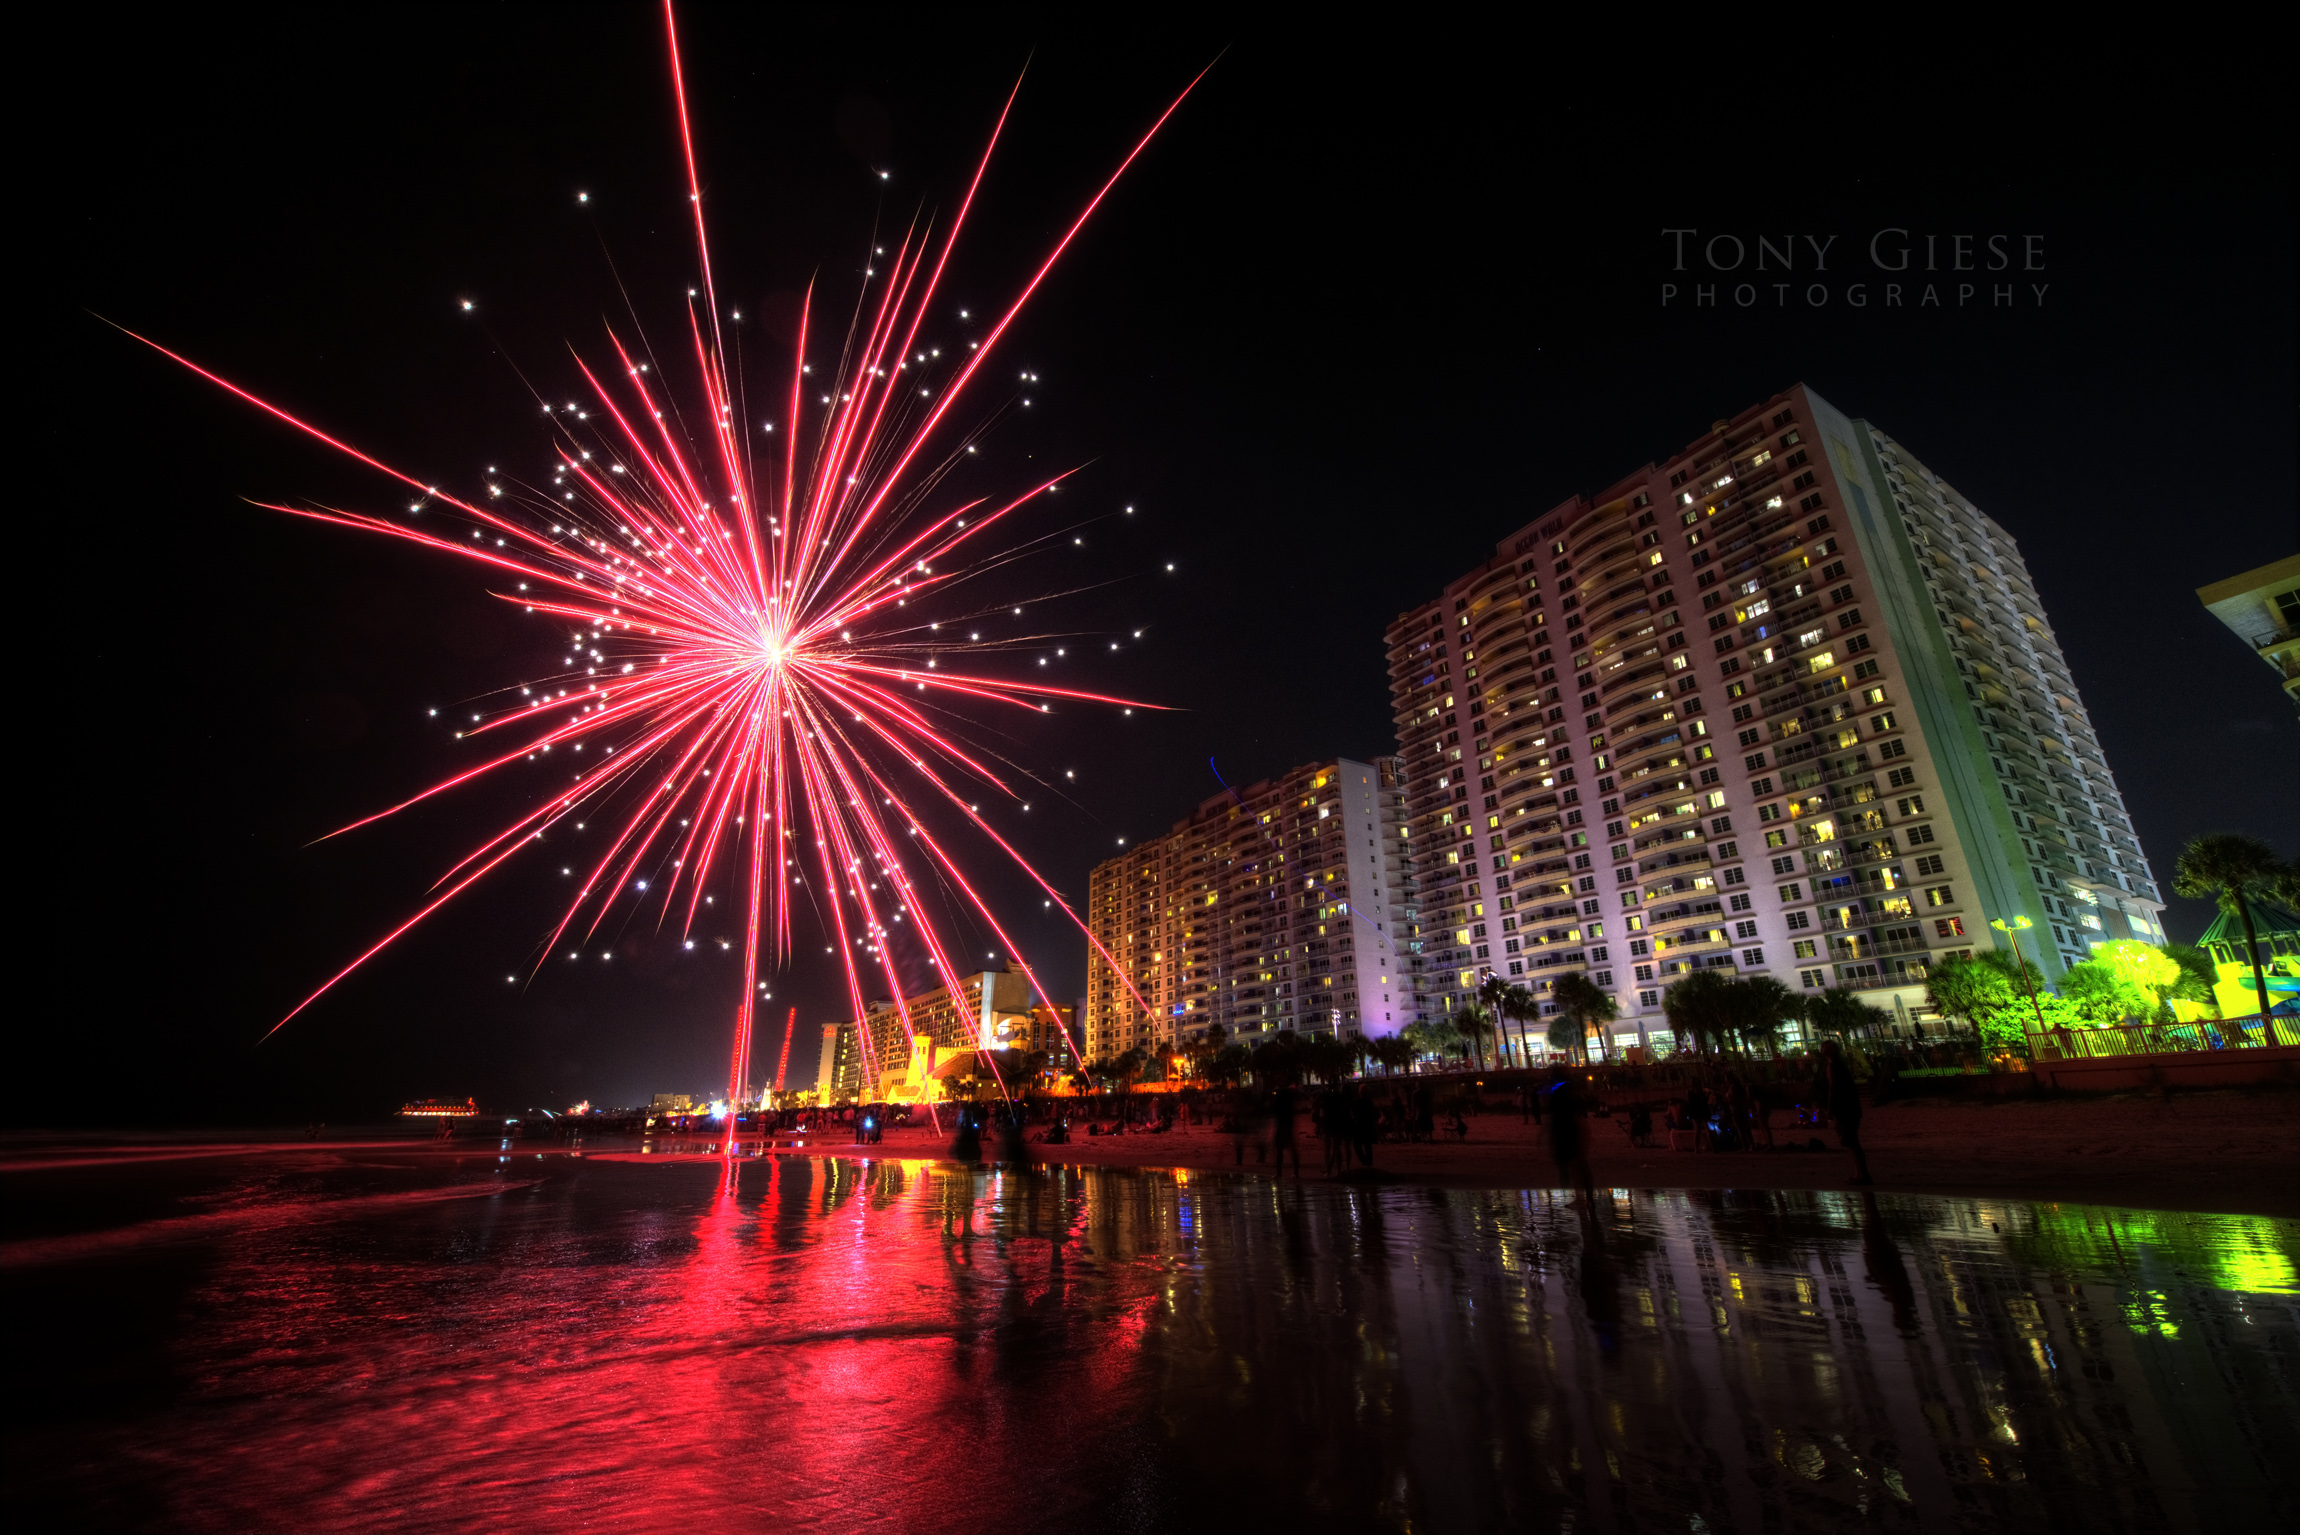 Fireworks on Daytona Beach in front of Wyndham Ocean Walk resort.